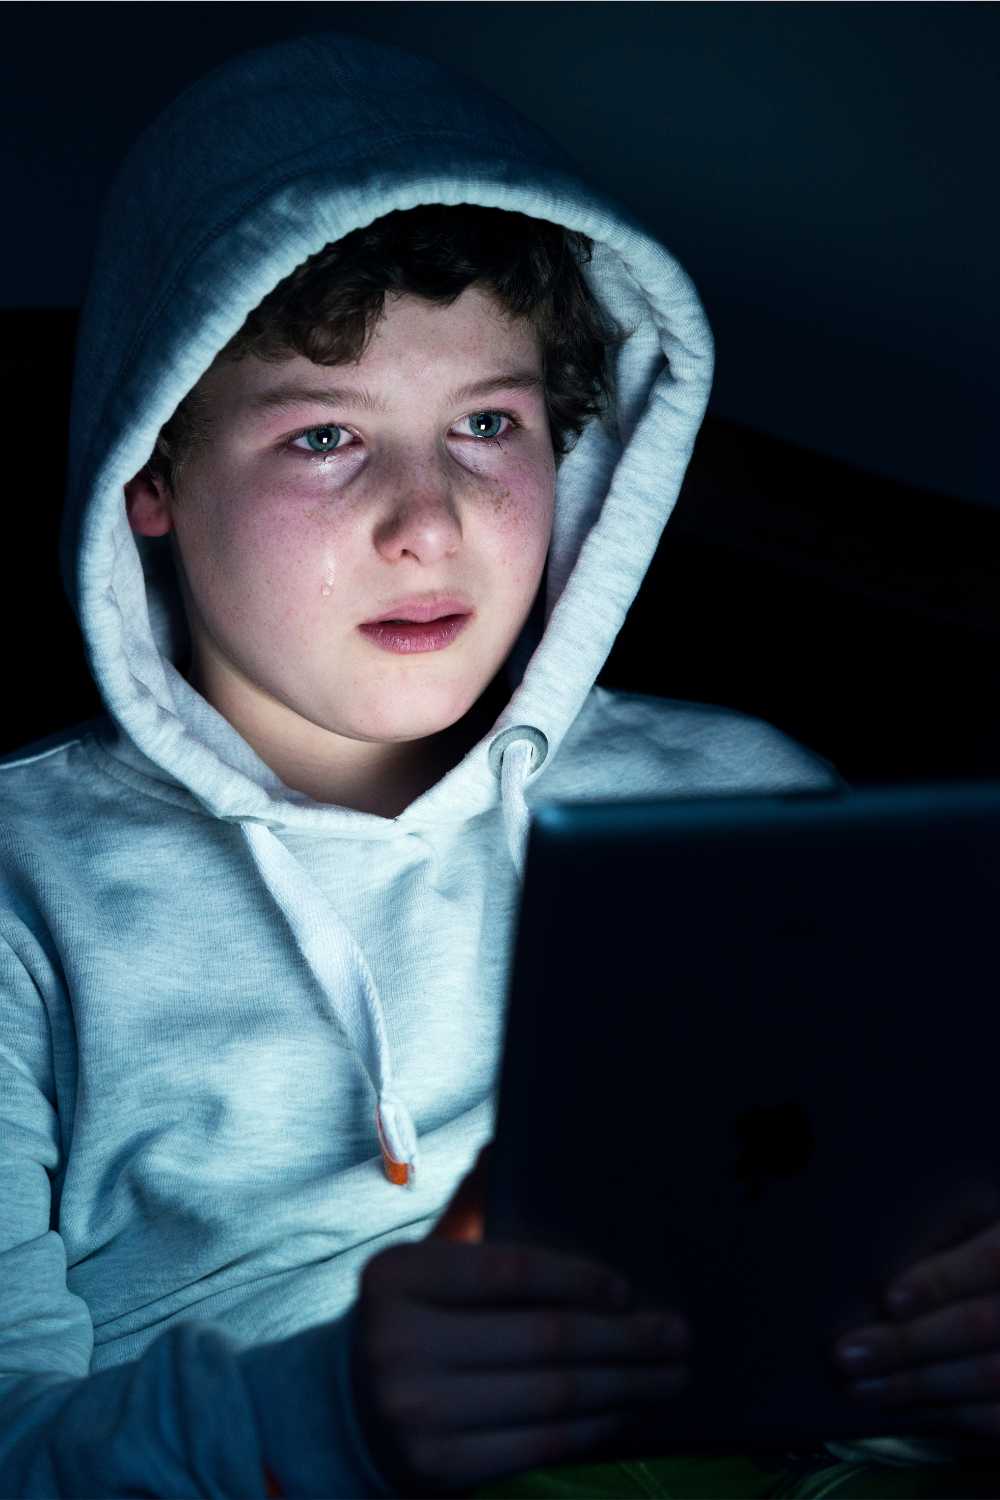 boy online, Internet safety for teens